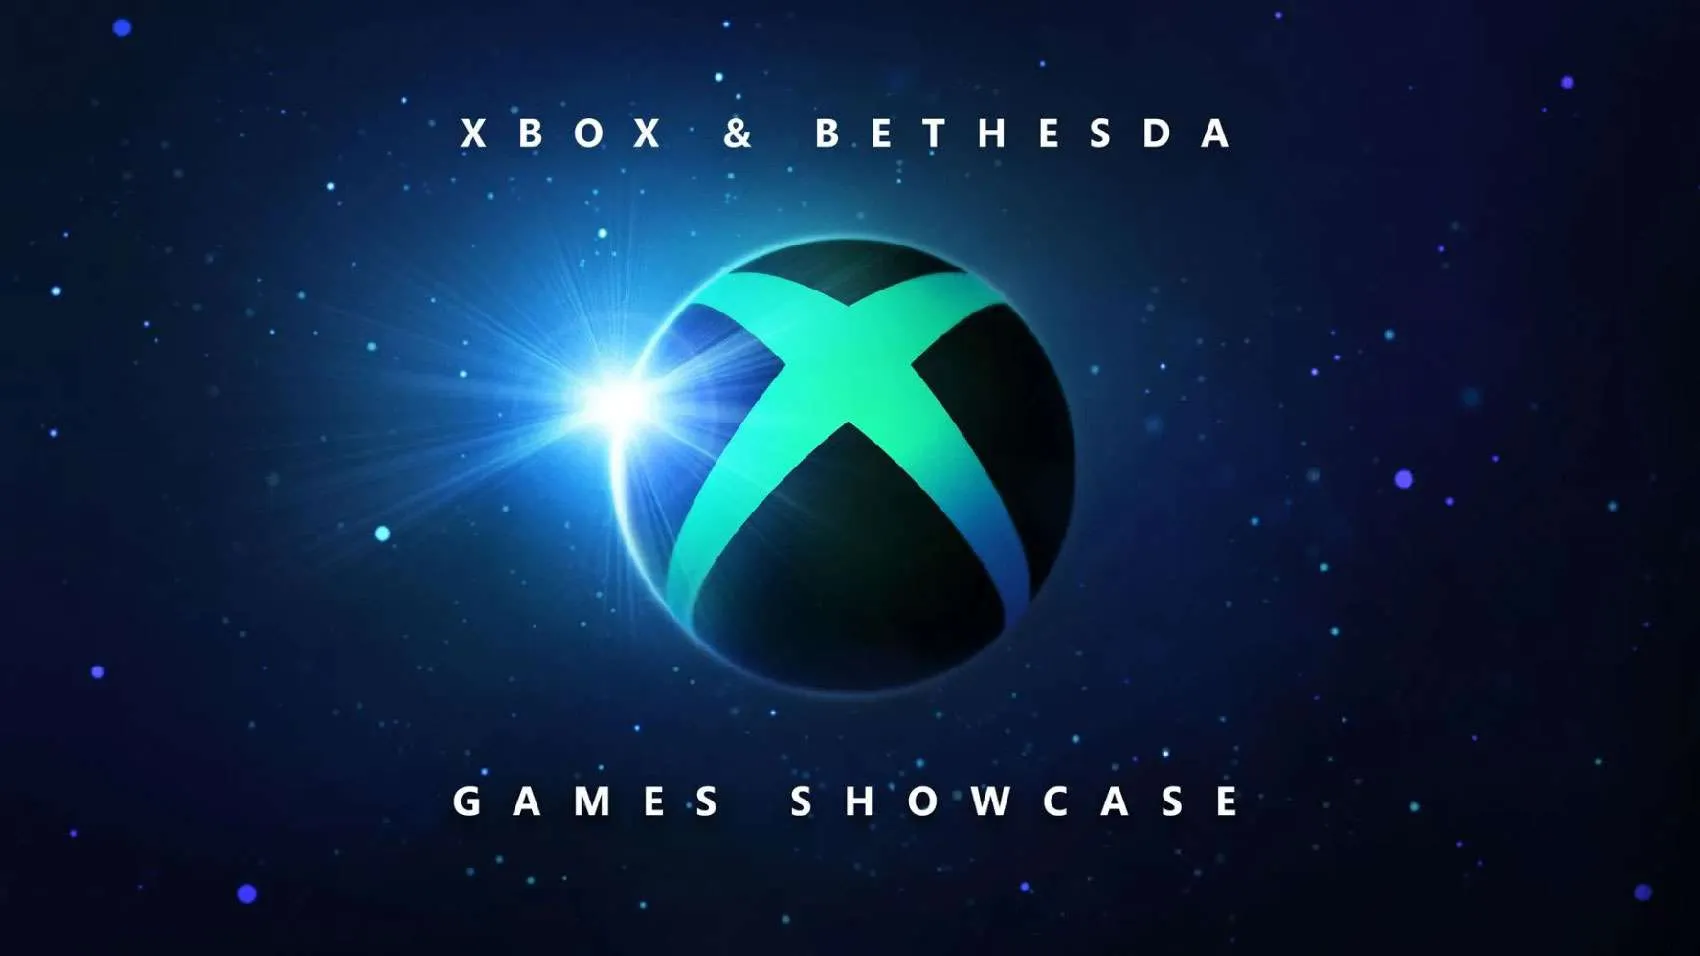 Xbox and Bethesda Games Showcase 2022 announced
